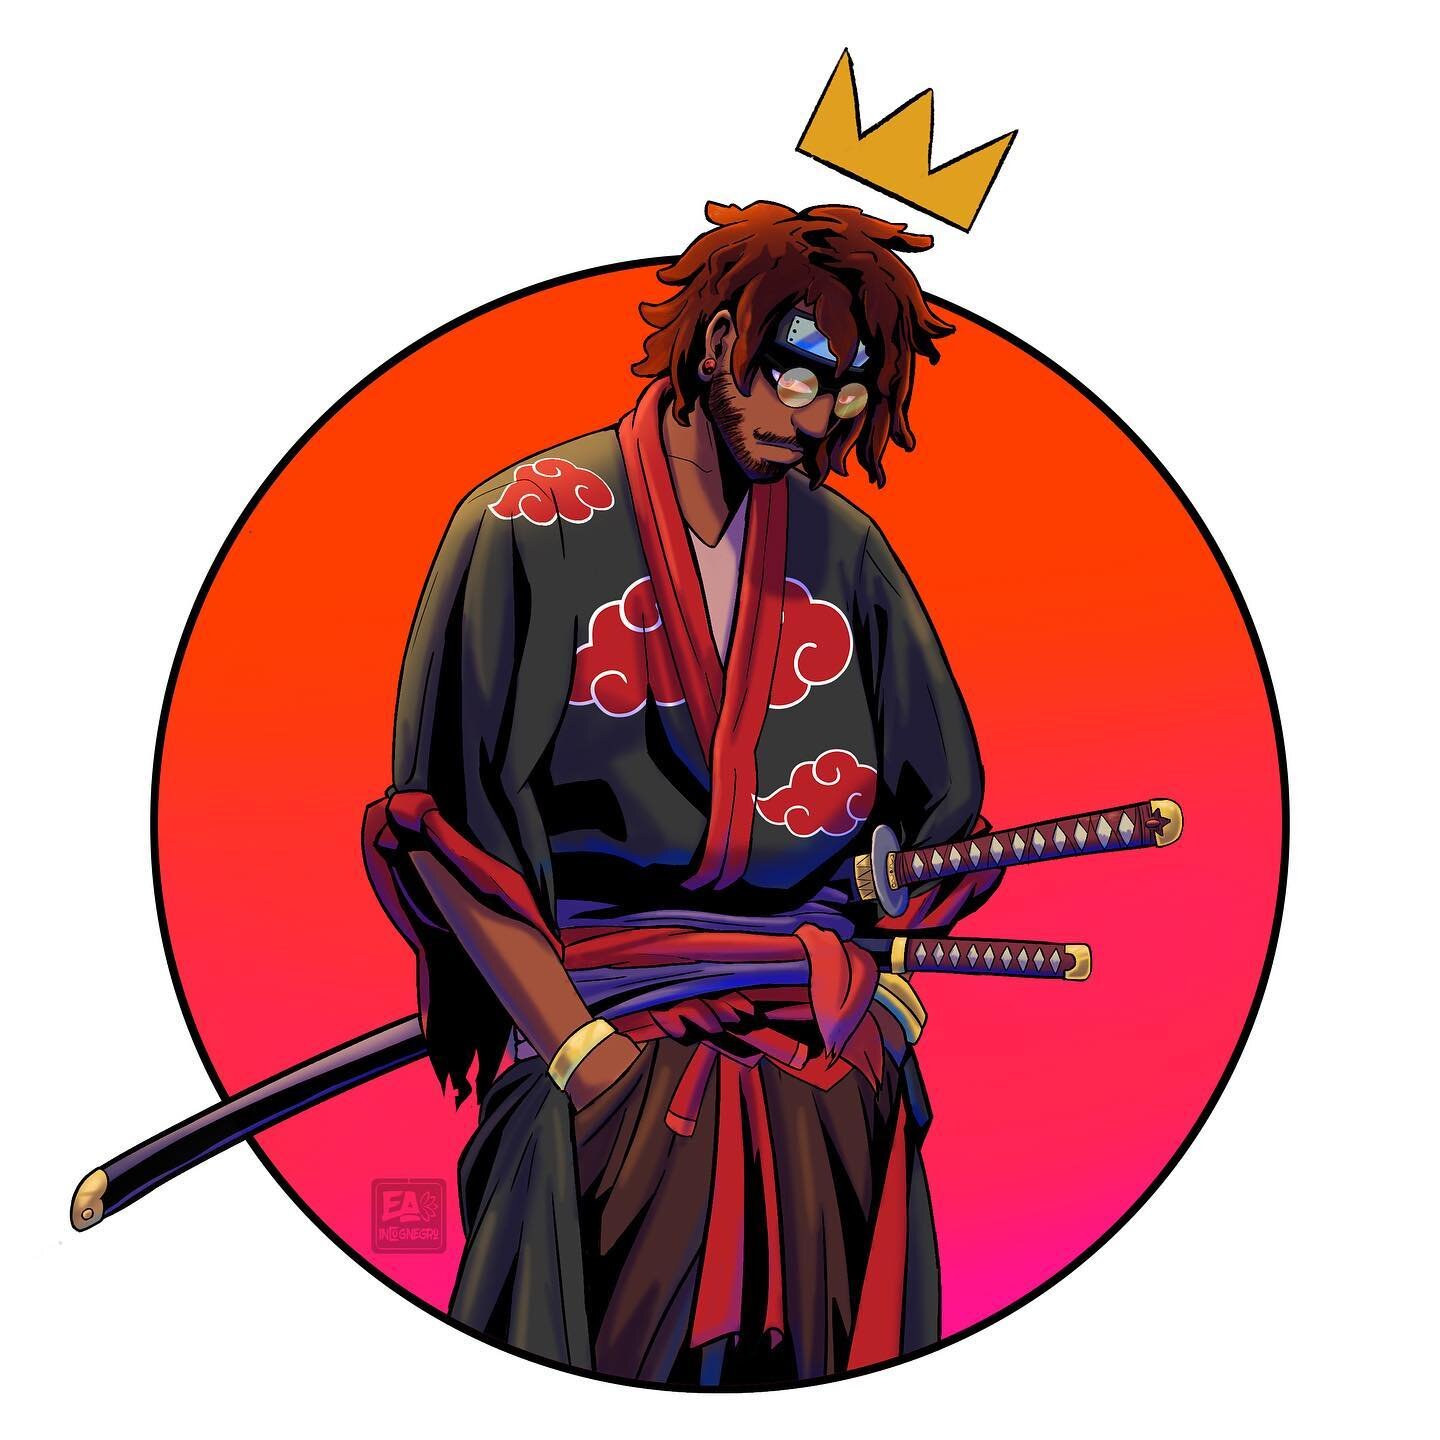 Incognegro

New logo inspired by playing lots of #ghostoftsushima 

Stickers soon?
#portrait #illustration #digitalart #naruto #anime #oc #afropunk #blackart #samurai #ninja #characterdesign